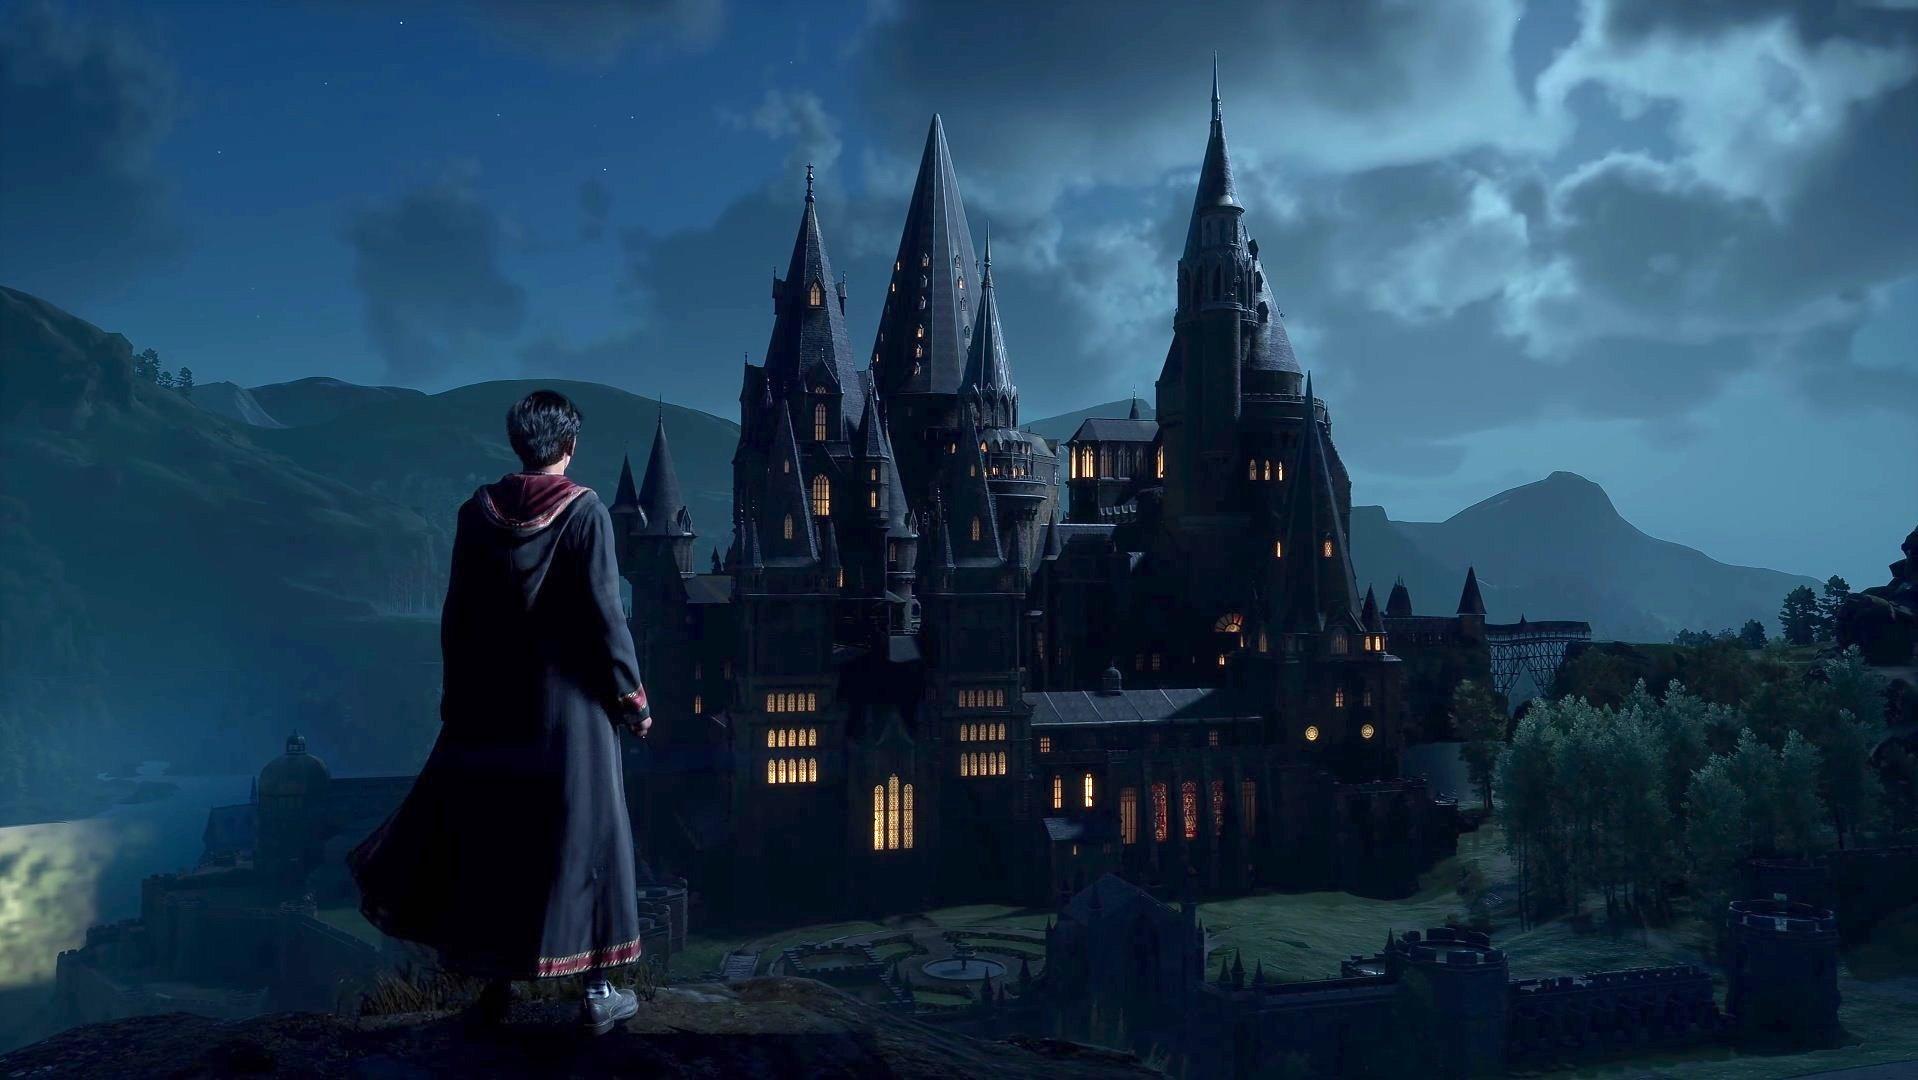 Does JK Rowling Make Money off of Hogwarts Legacy?